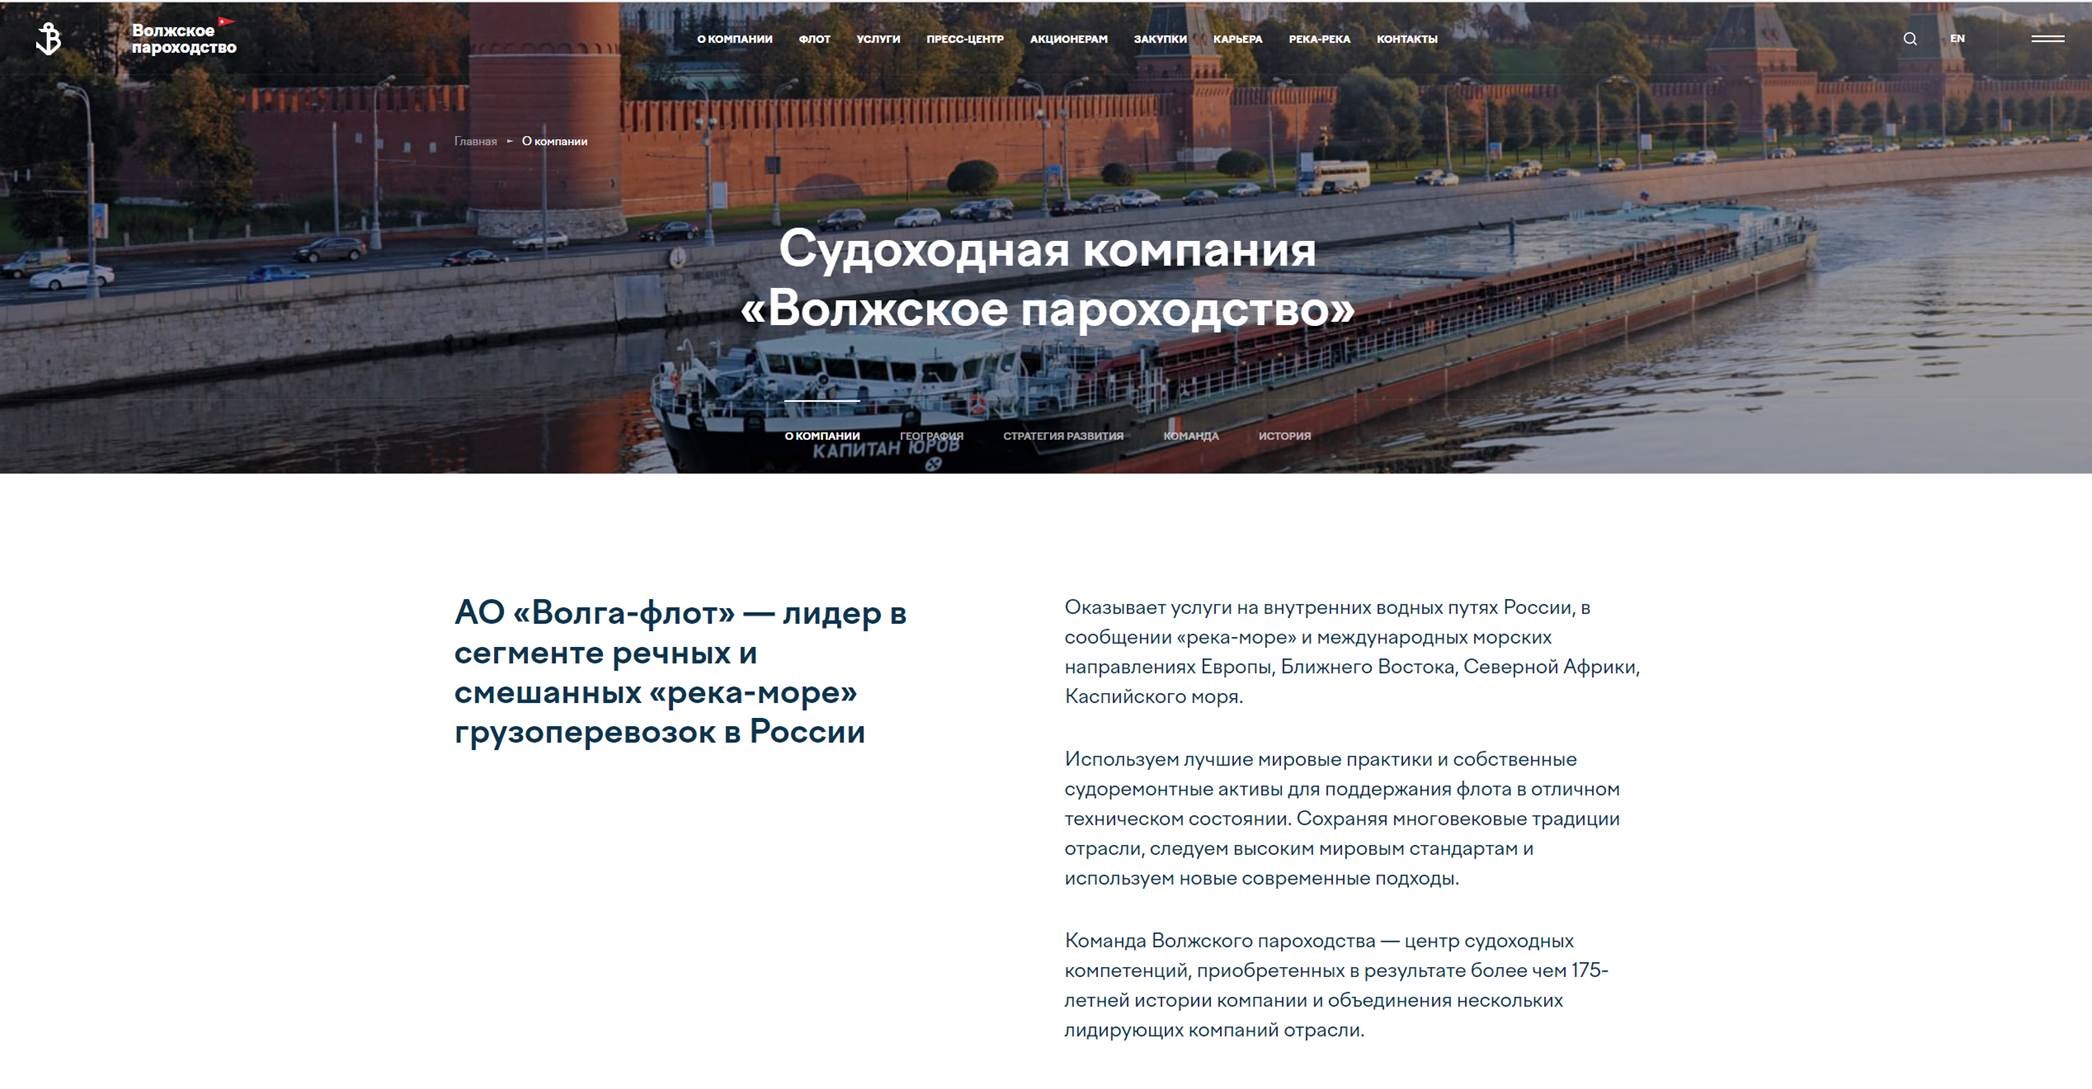 Volga Shipping Company presents its new look website